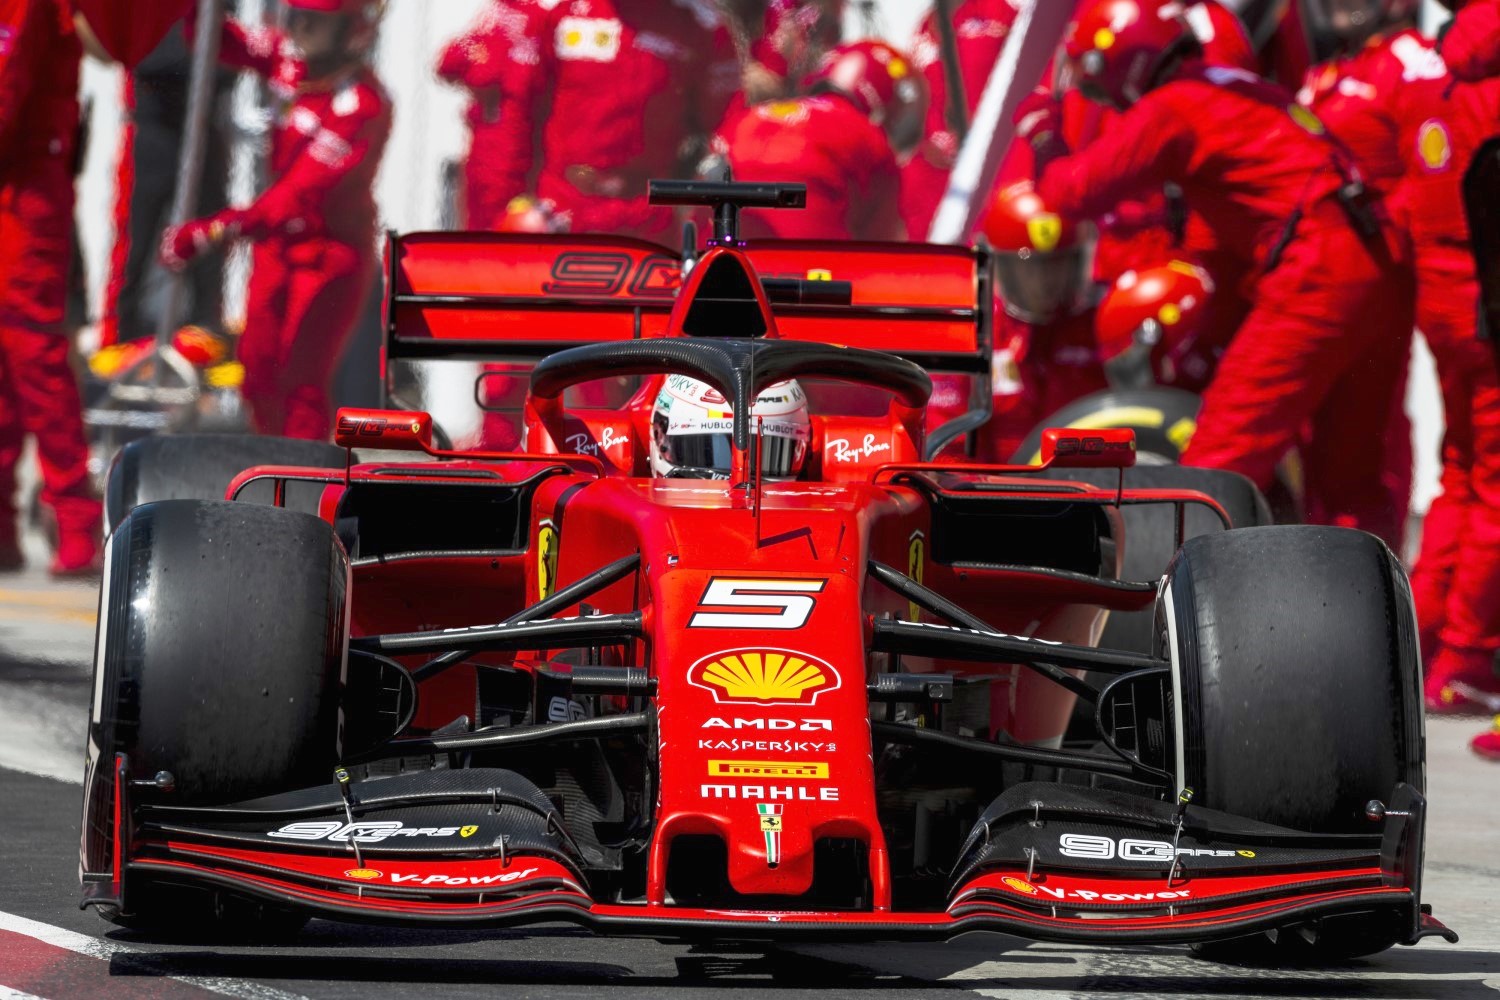 Sebastian Vettel has been too prone to errors of late